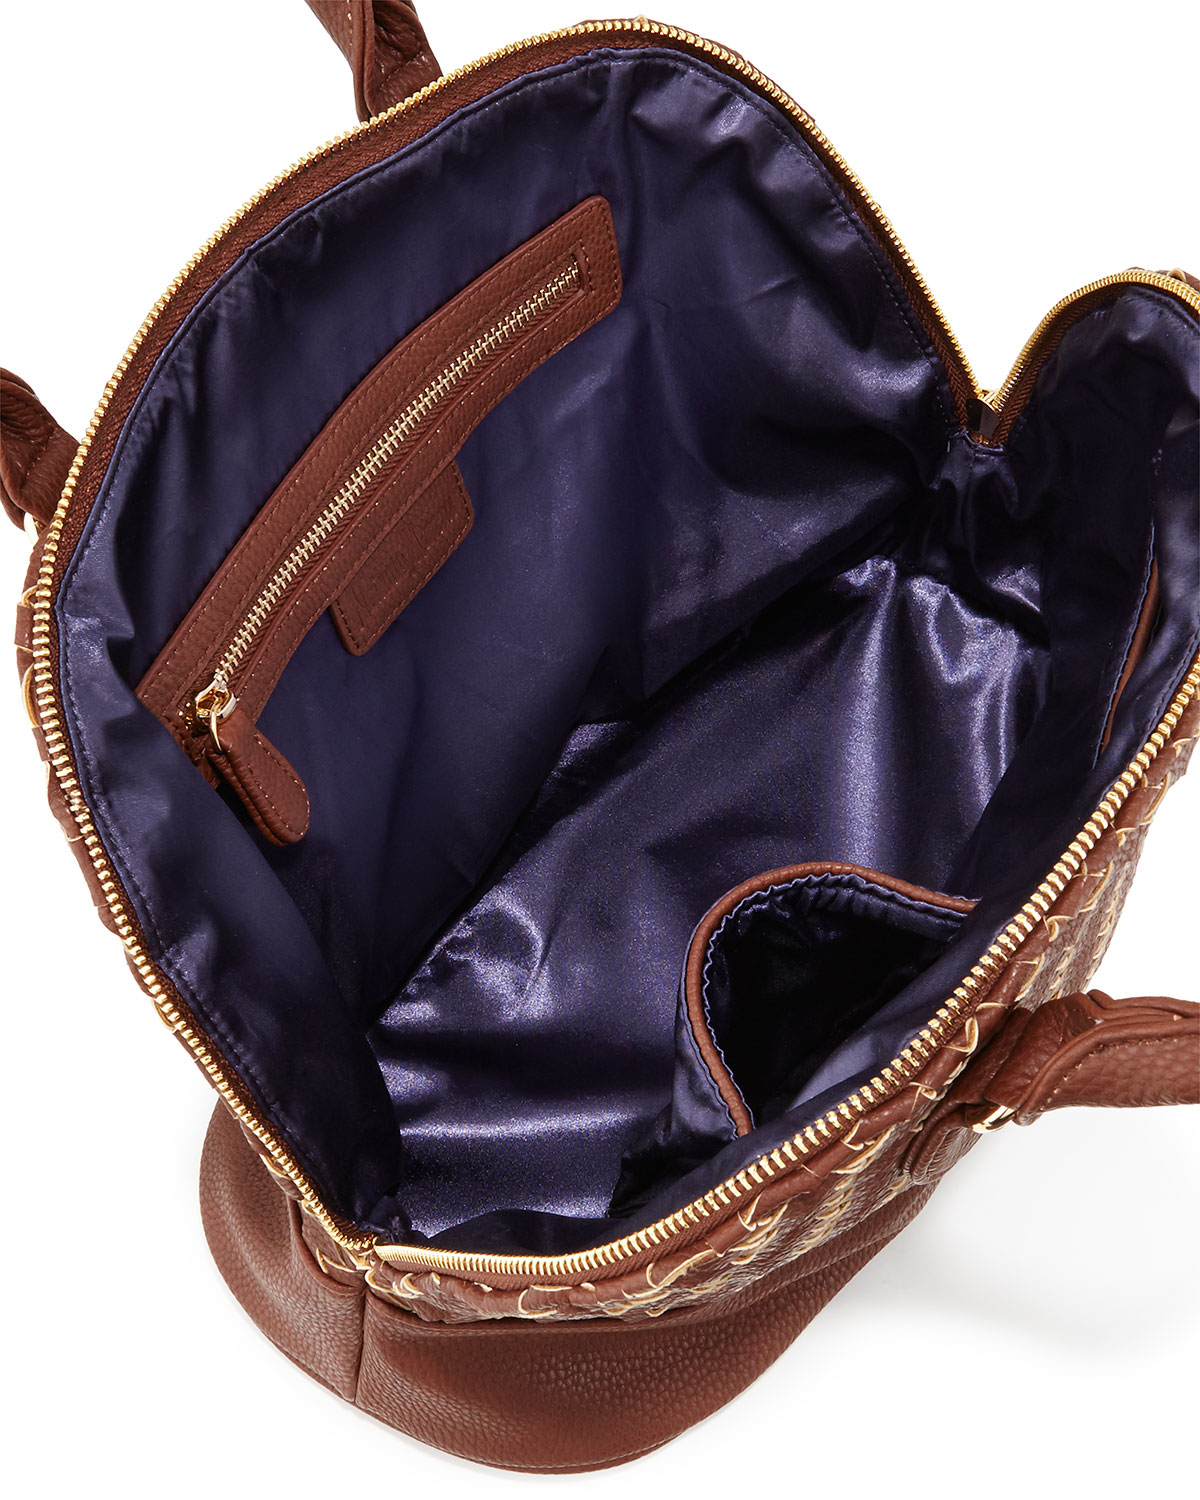 Lyst - Neiman Marcus Woven Dome Satchel Bag in Brown